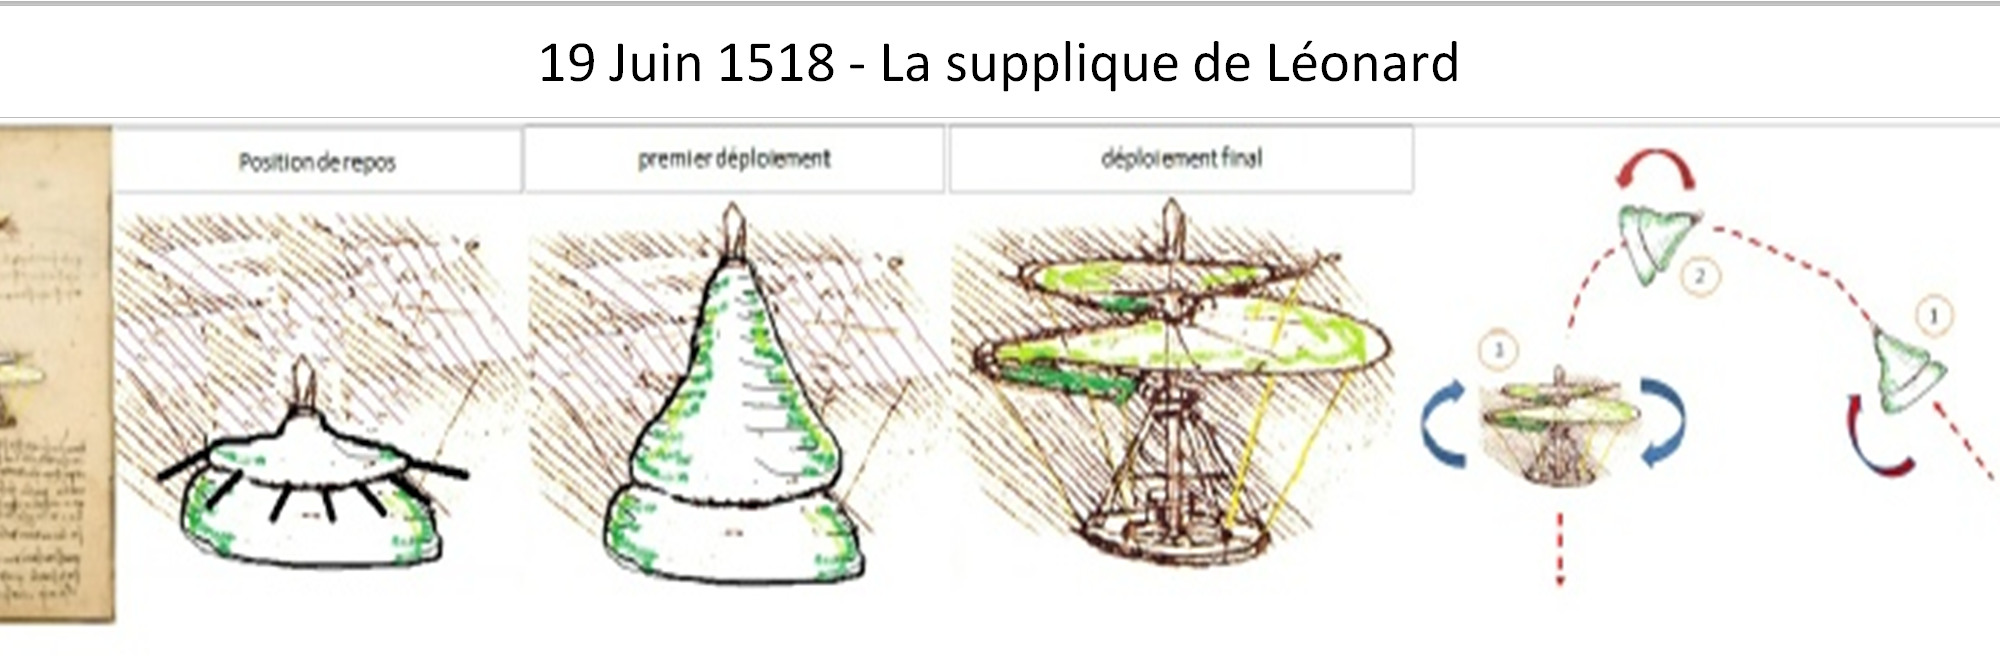 19 Juin 1518 - La supplique de Léonard